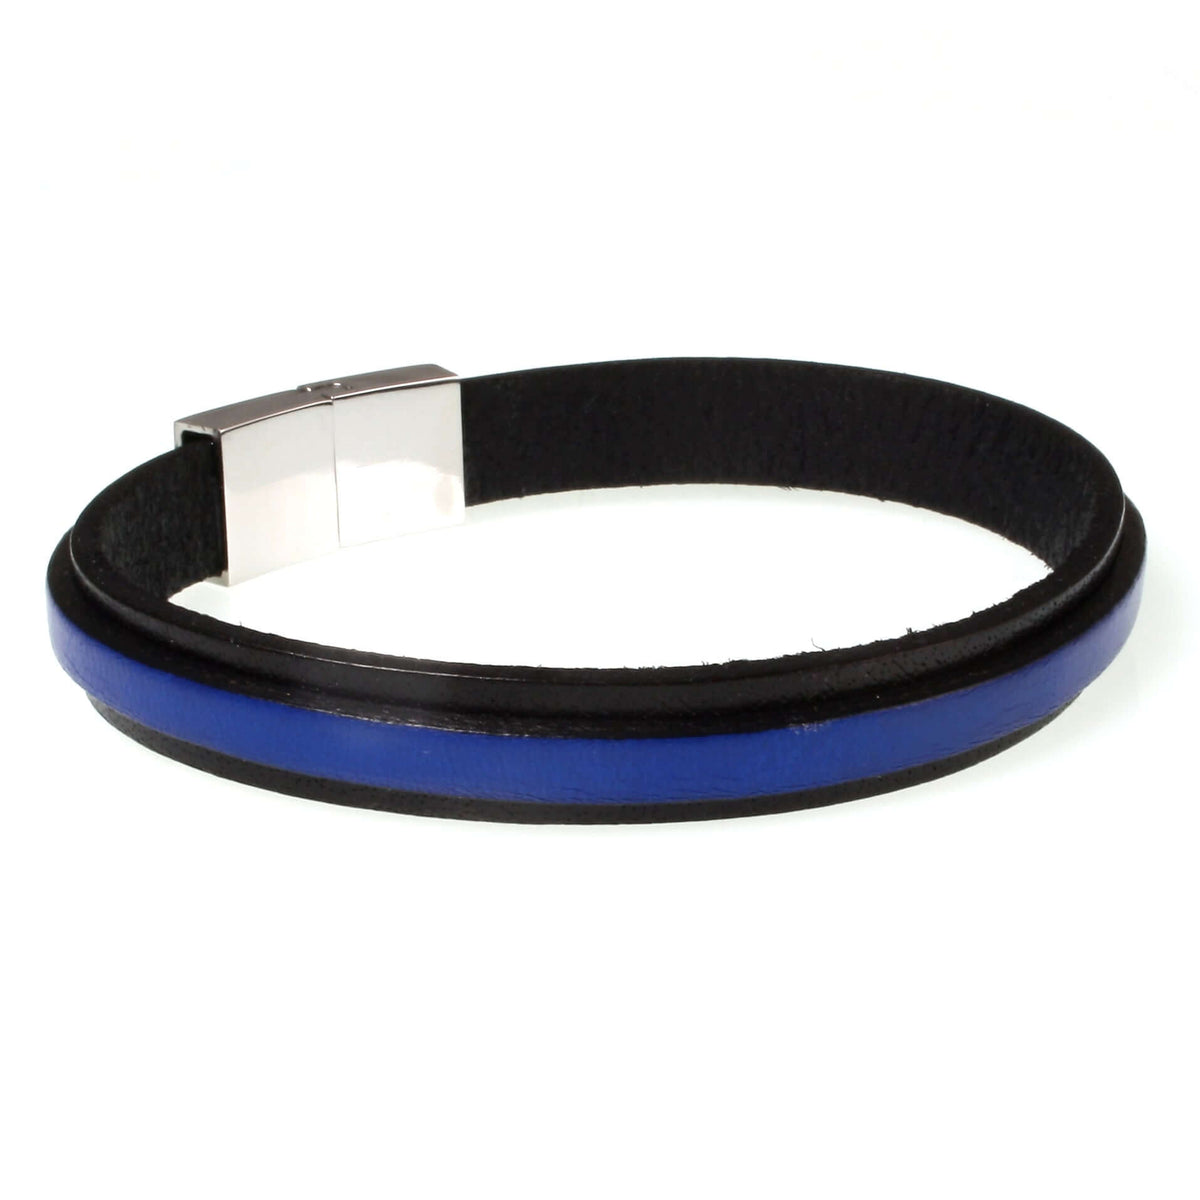 Herren-Leder-Armband-Line-schwarz-blau-flach-Edelstahlverschluss-hinten-wavepirate-shop